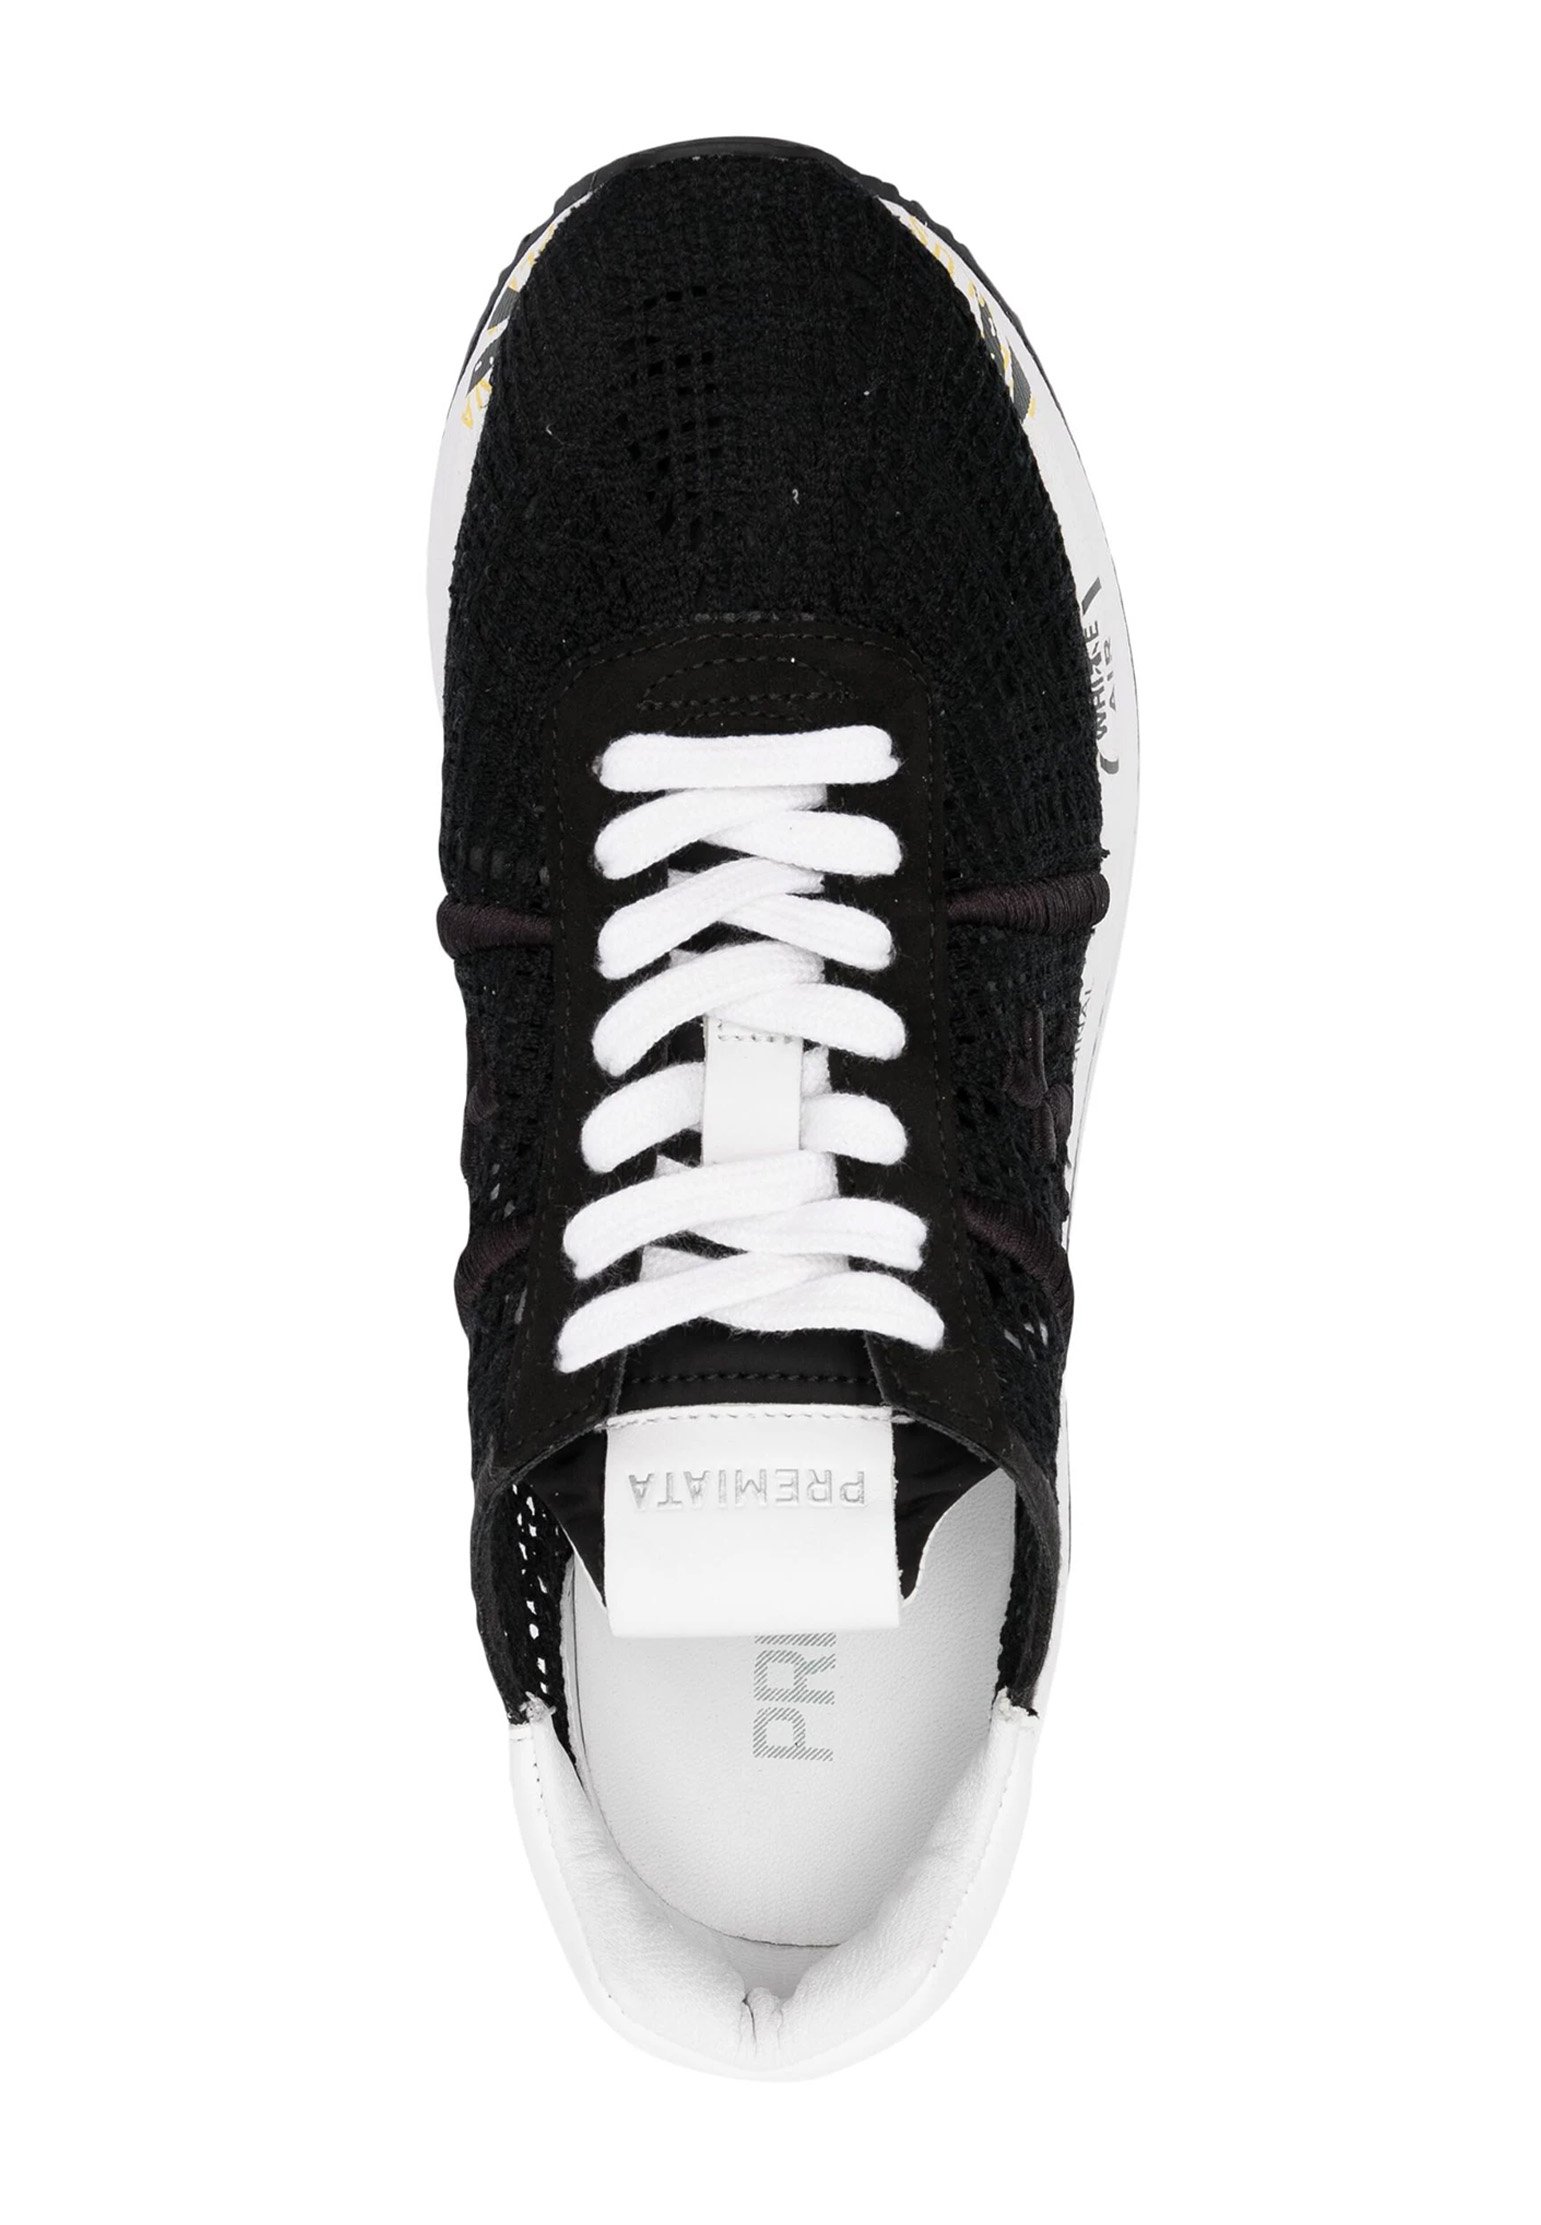 Sneakers PREMIATA Color: black (Code: 4194) in online store Allure